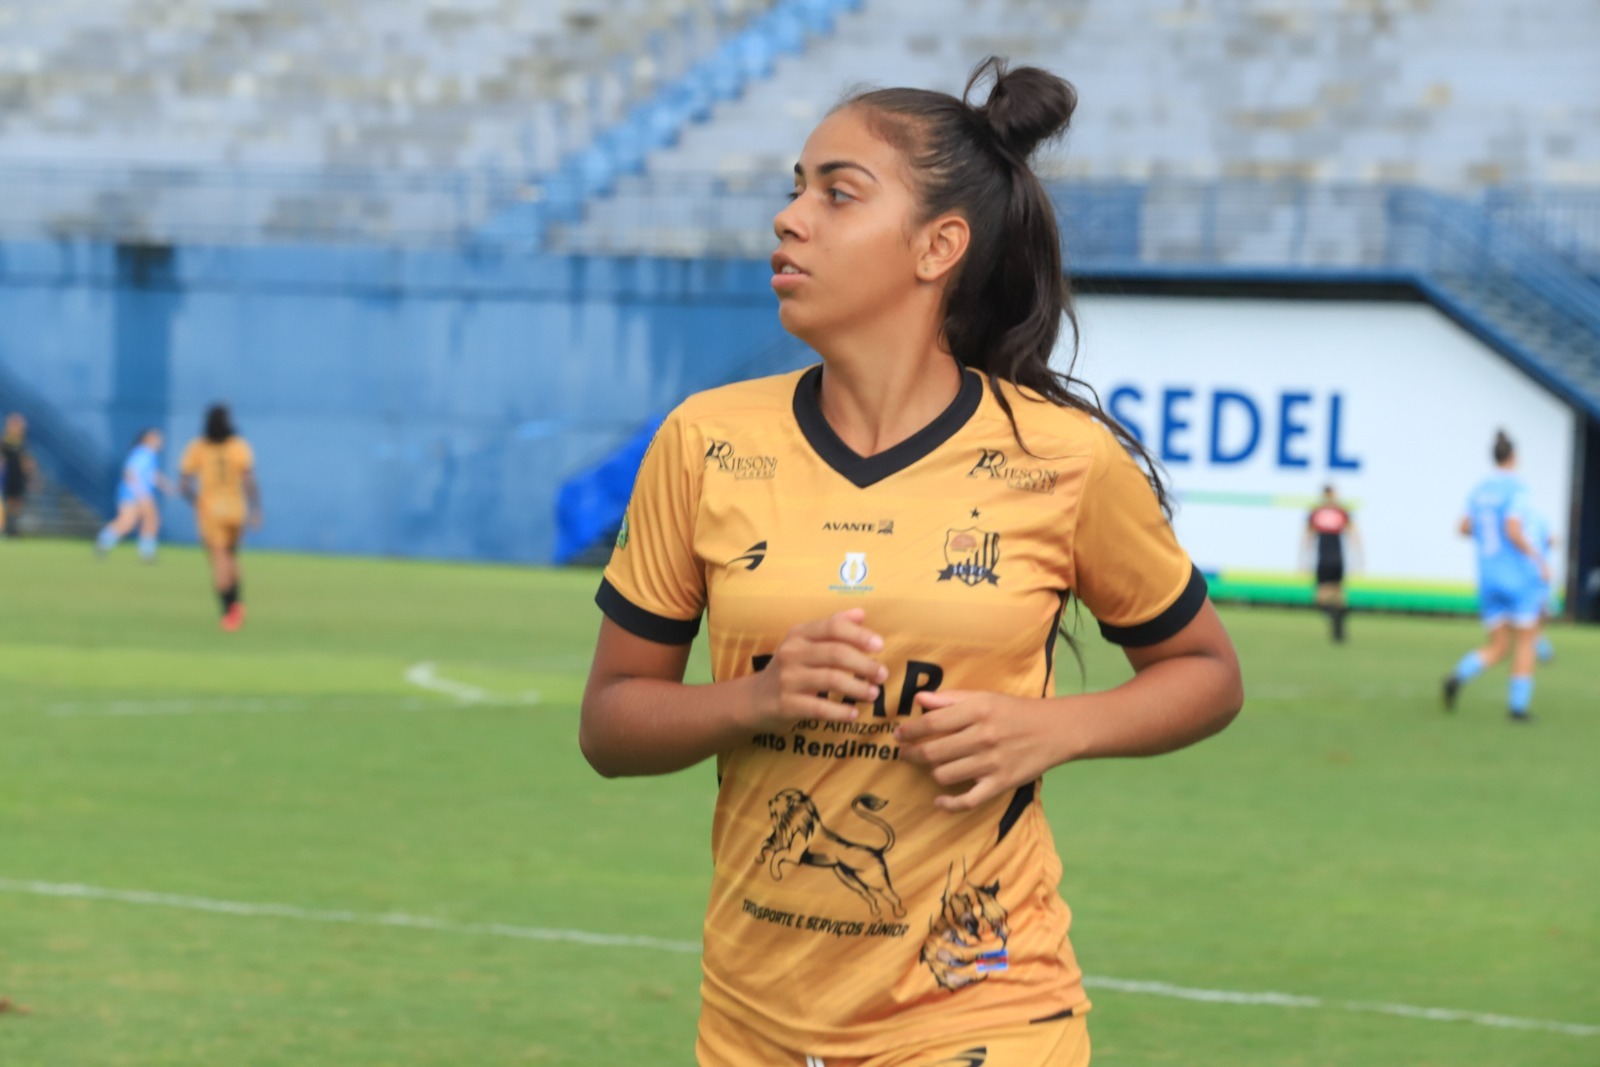 JC Futebol Clube adds Pelci athlete to the women’s professional squad